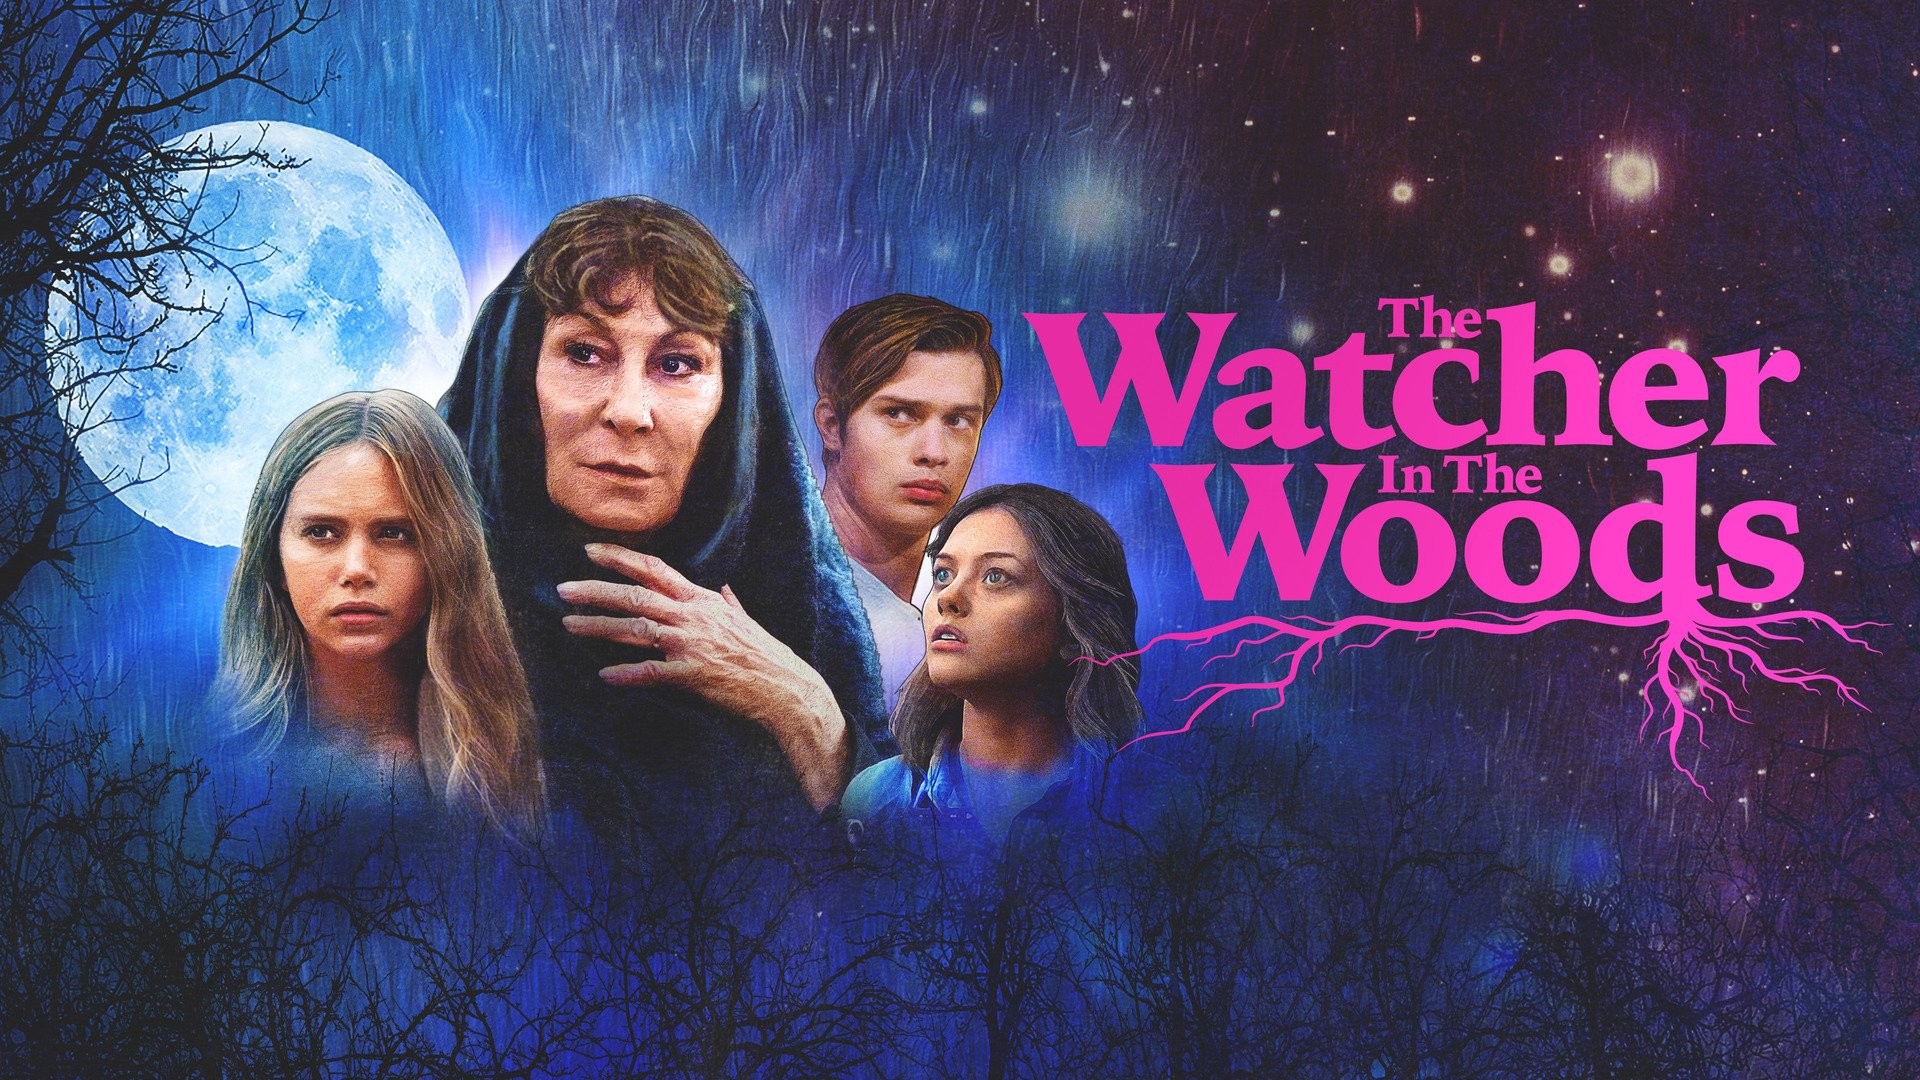 Watcher in the Woods' Musical in Development